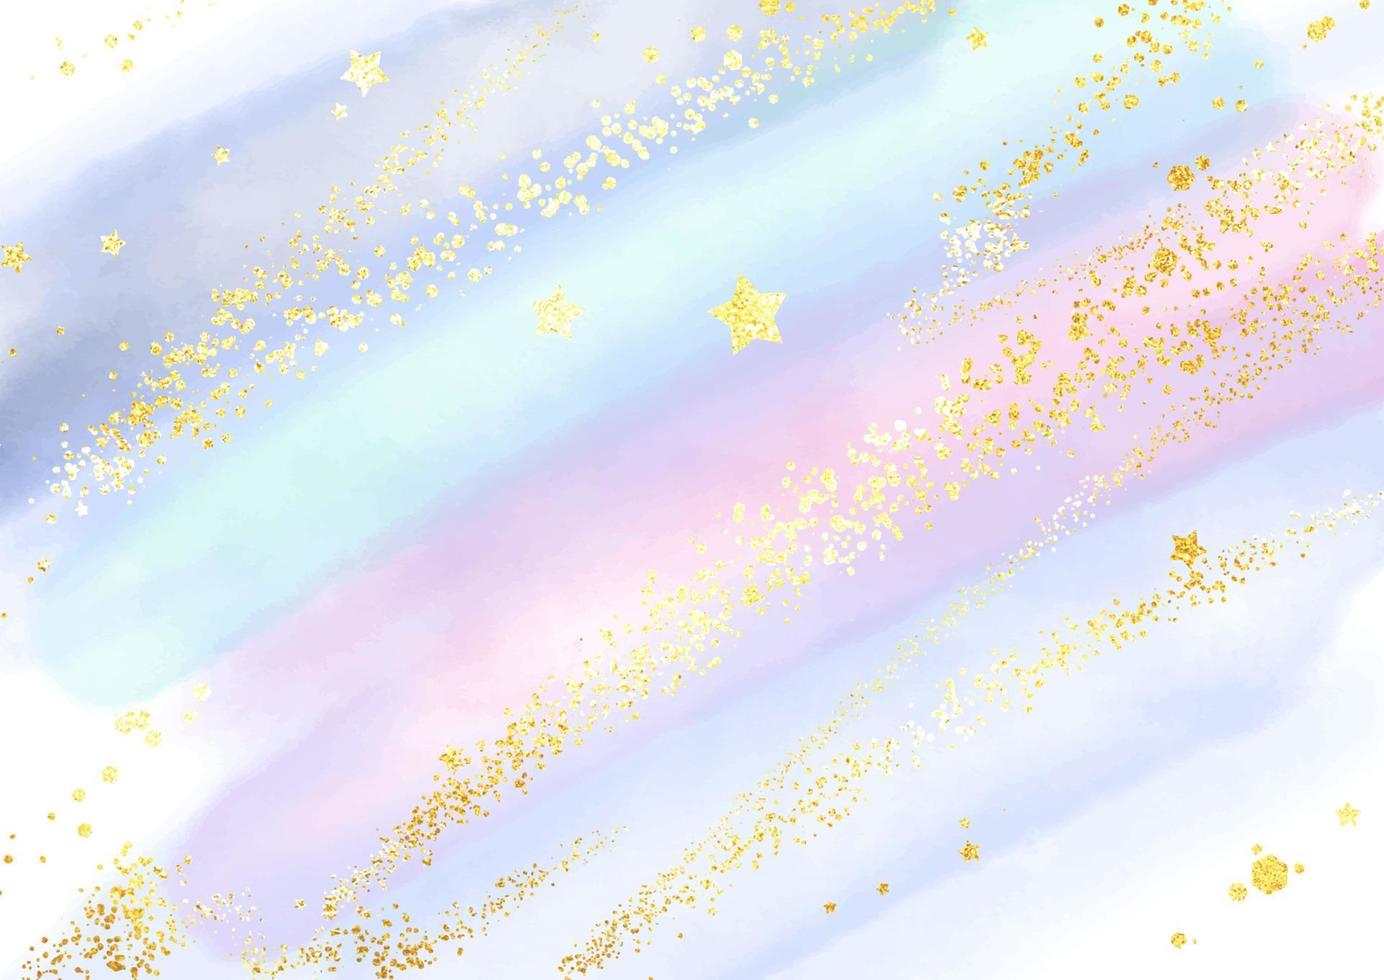 pastel waterverf achtergrond met glitterachtig goud sterren en confetti vector